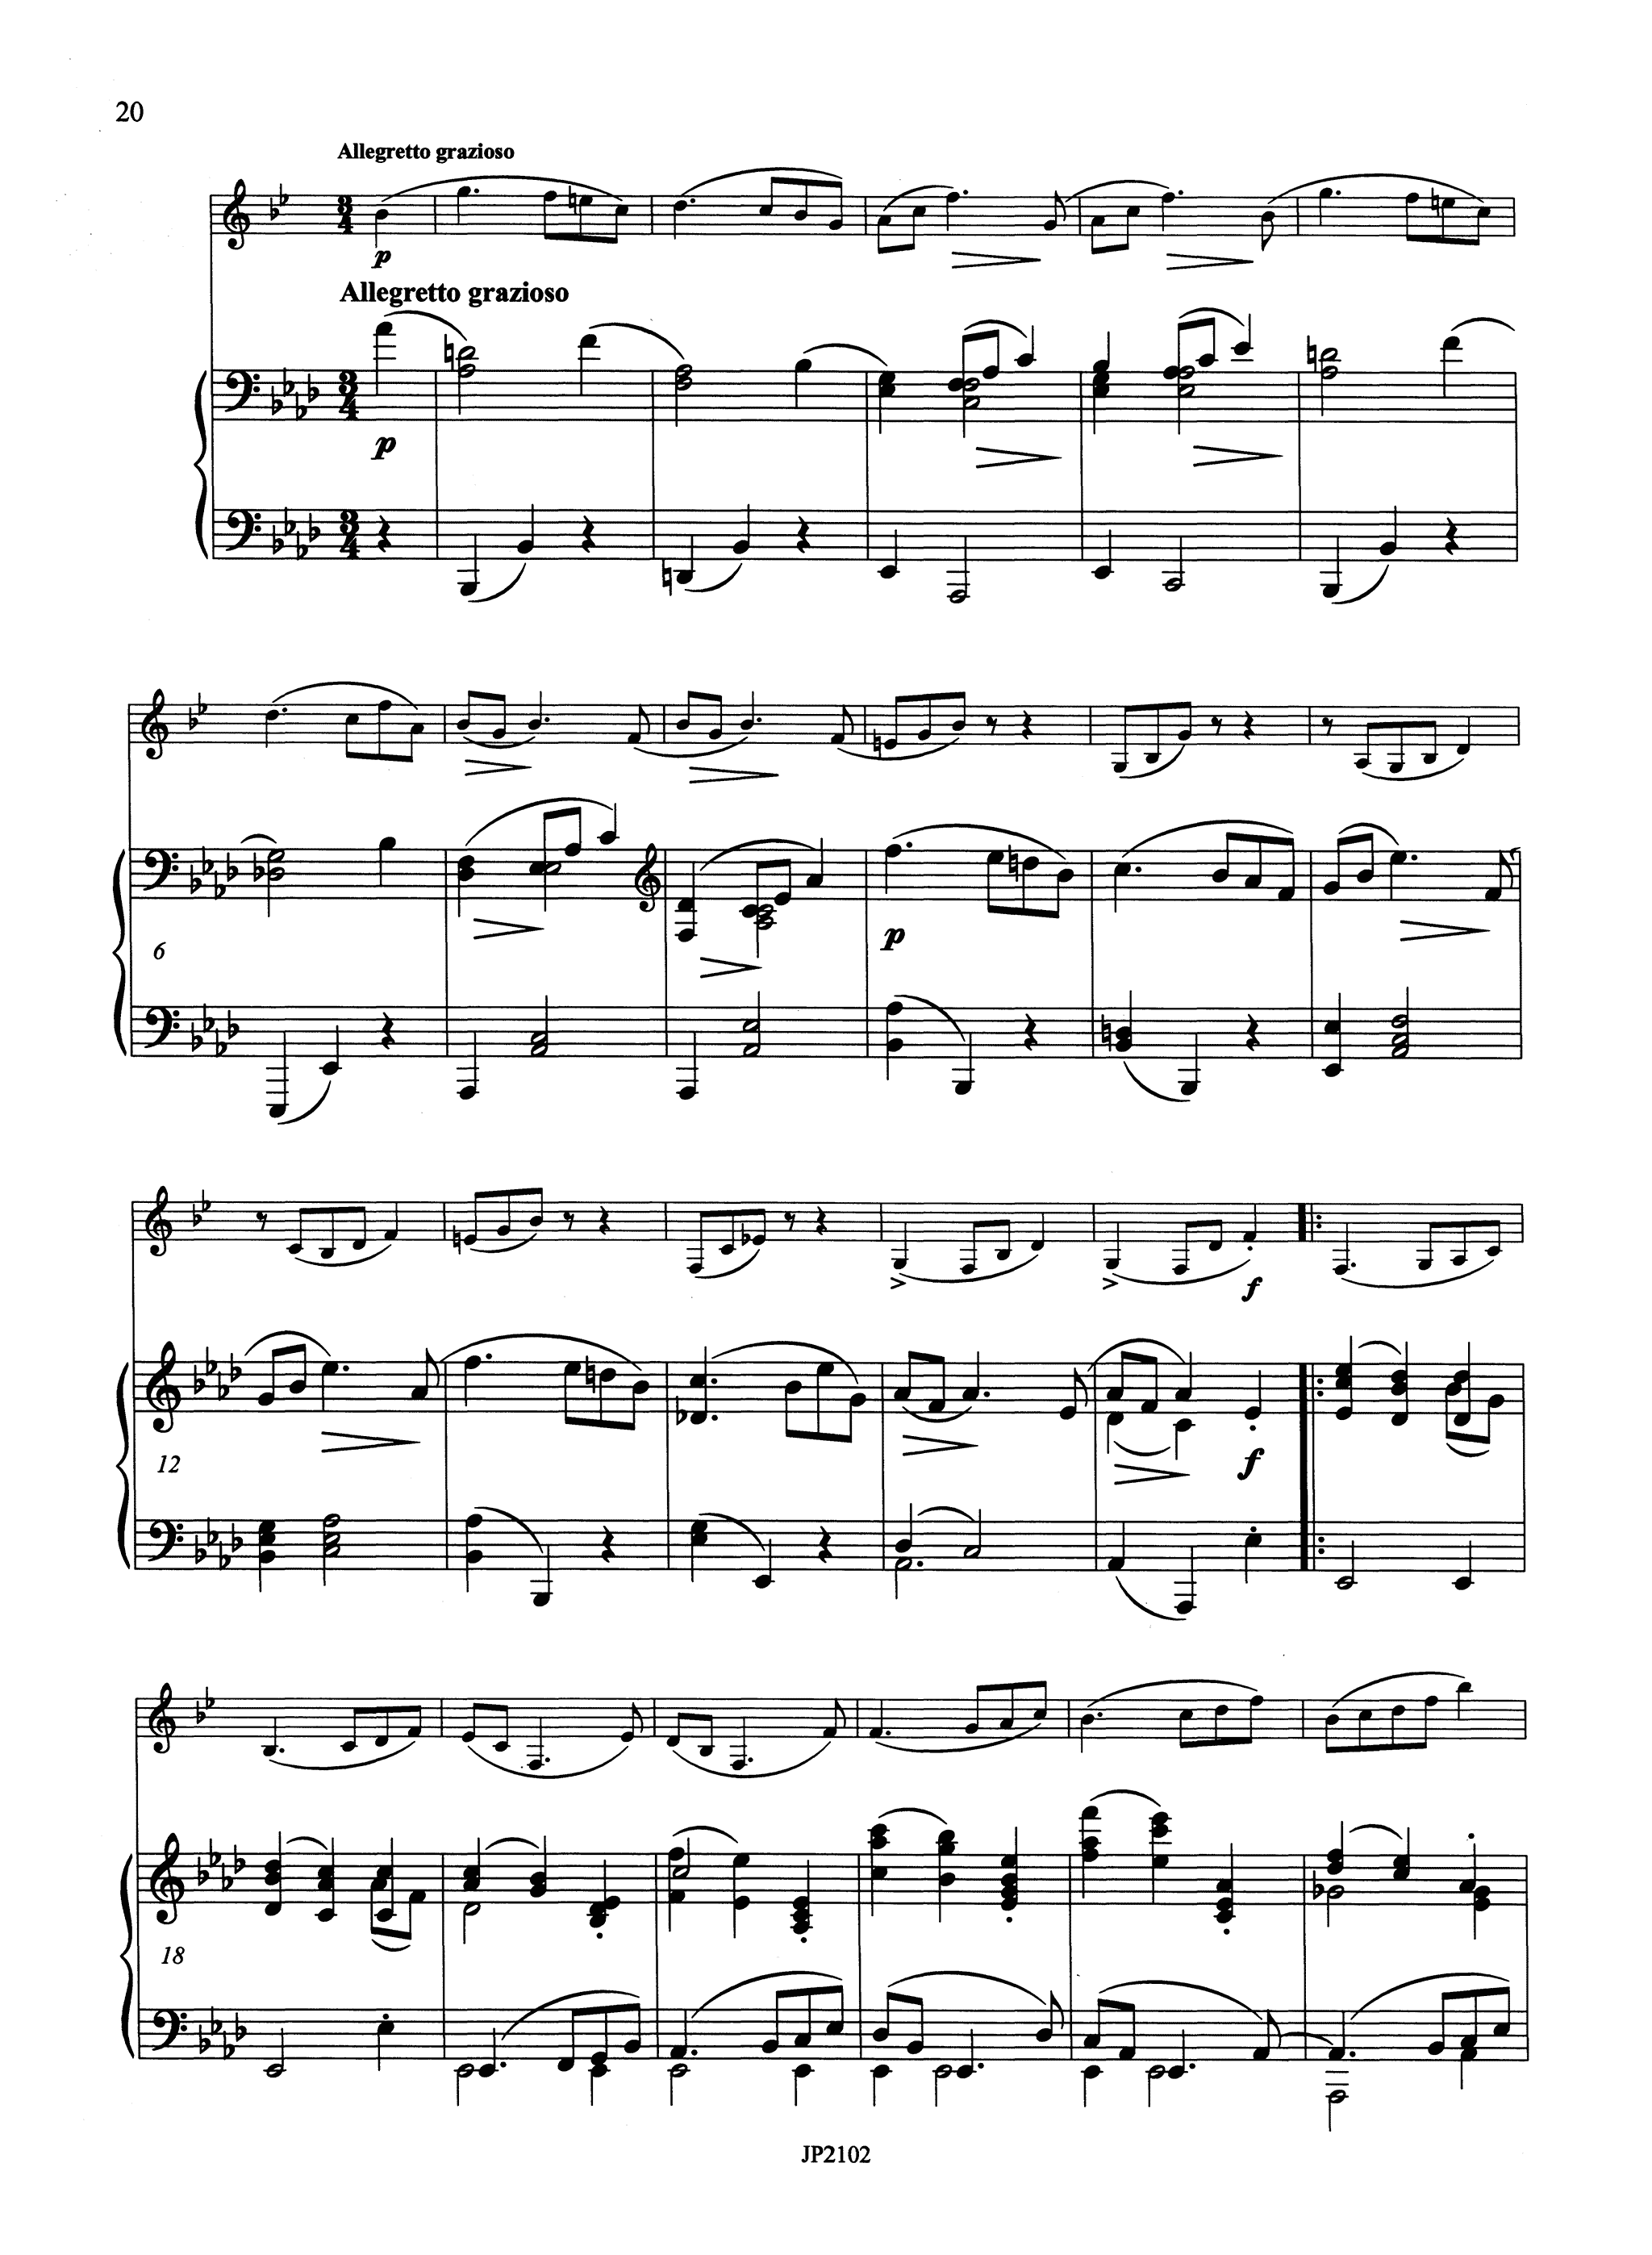 Brahms Sonata in F Minor, Op. 120 No. 1 - Movement 3